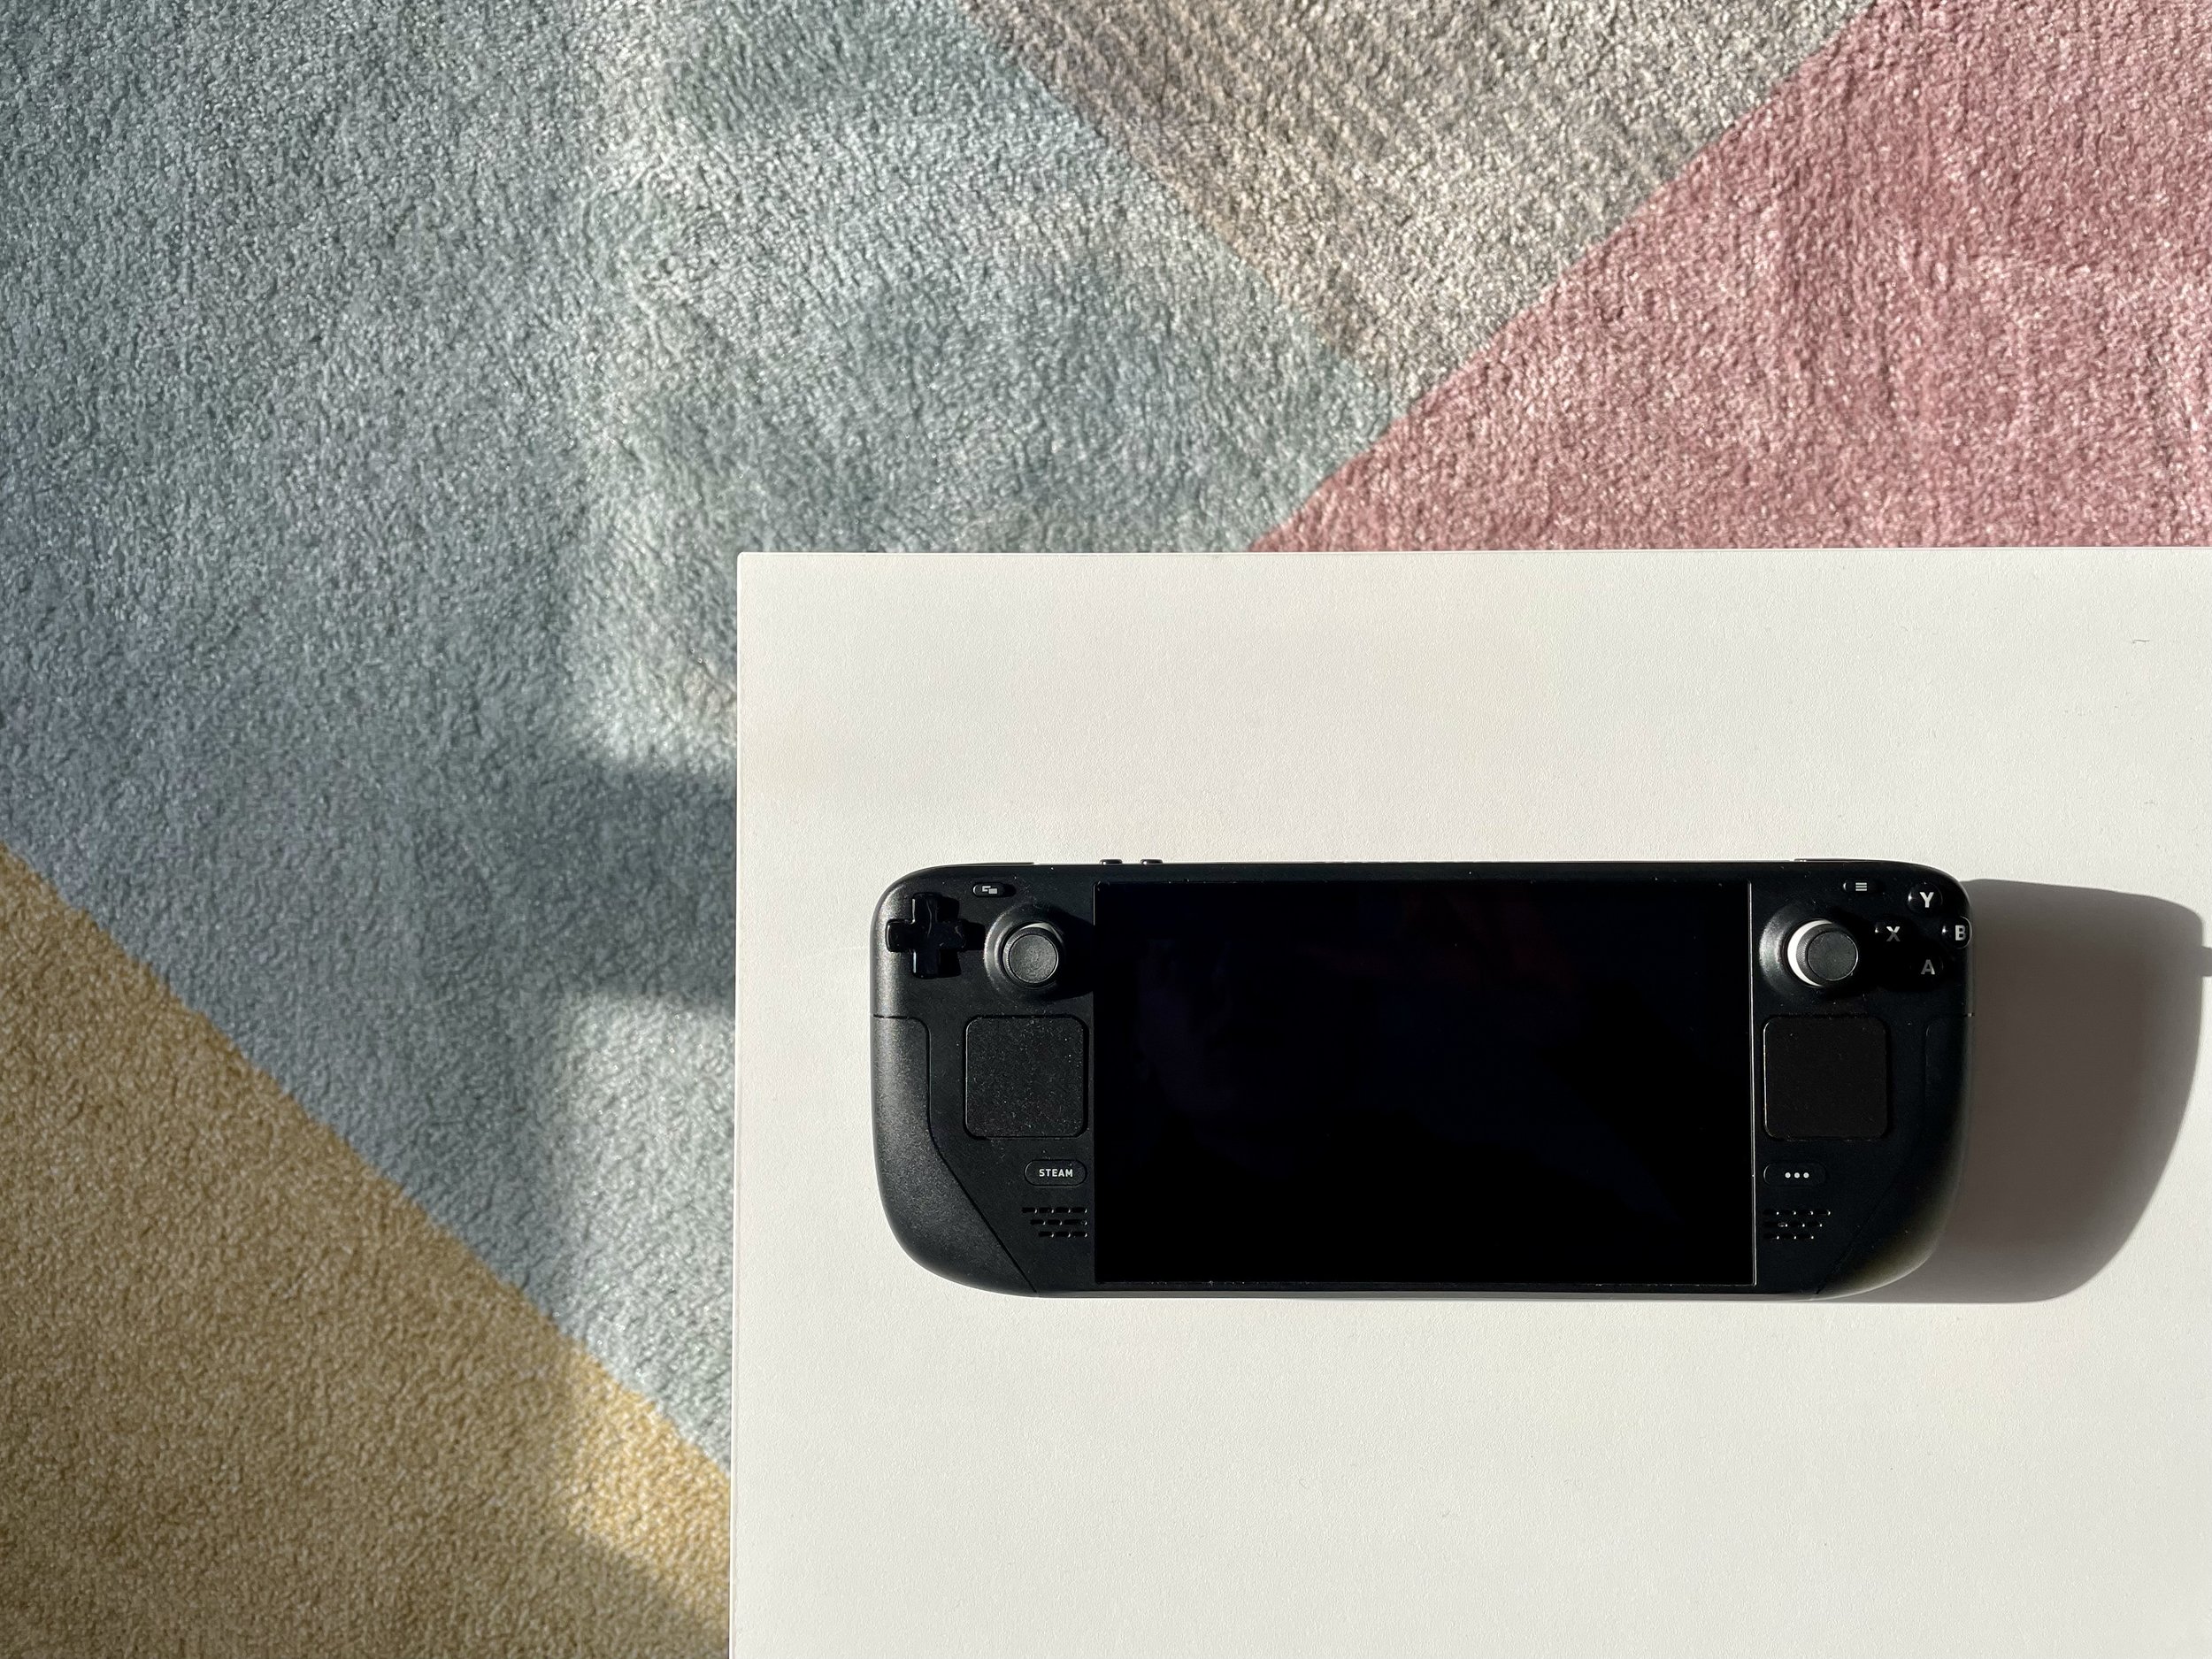 Valve Accidentally Plugs Nintendo Switch Emulator in Steam Deck Promo